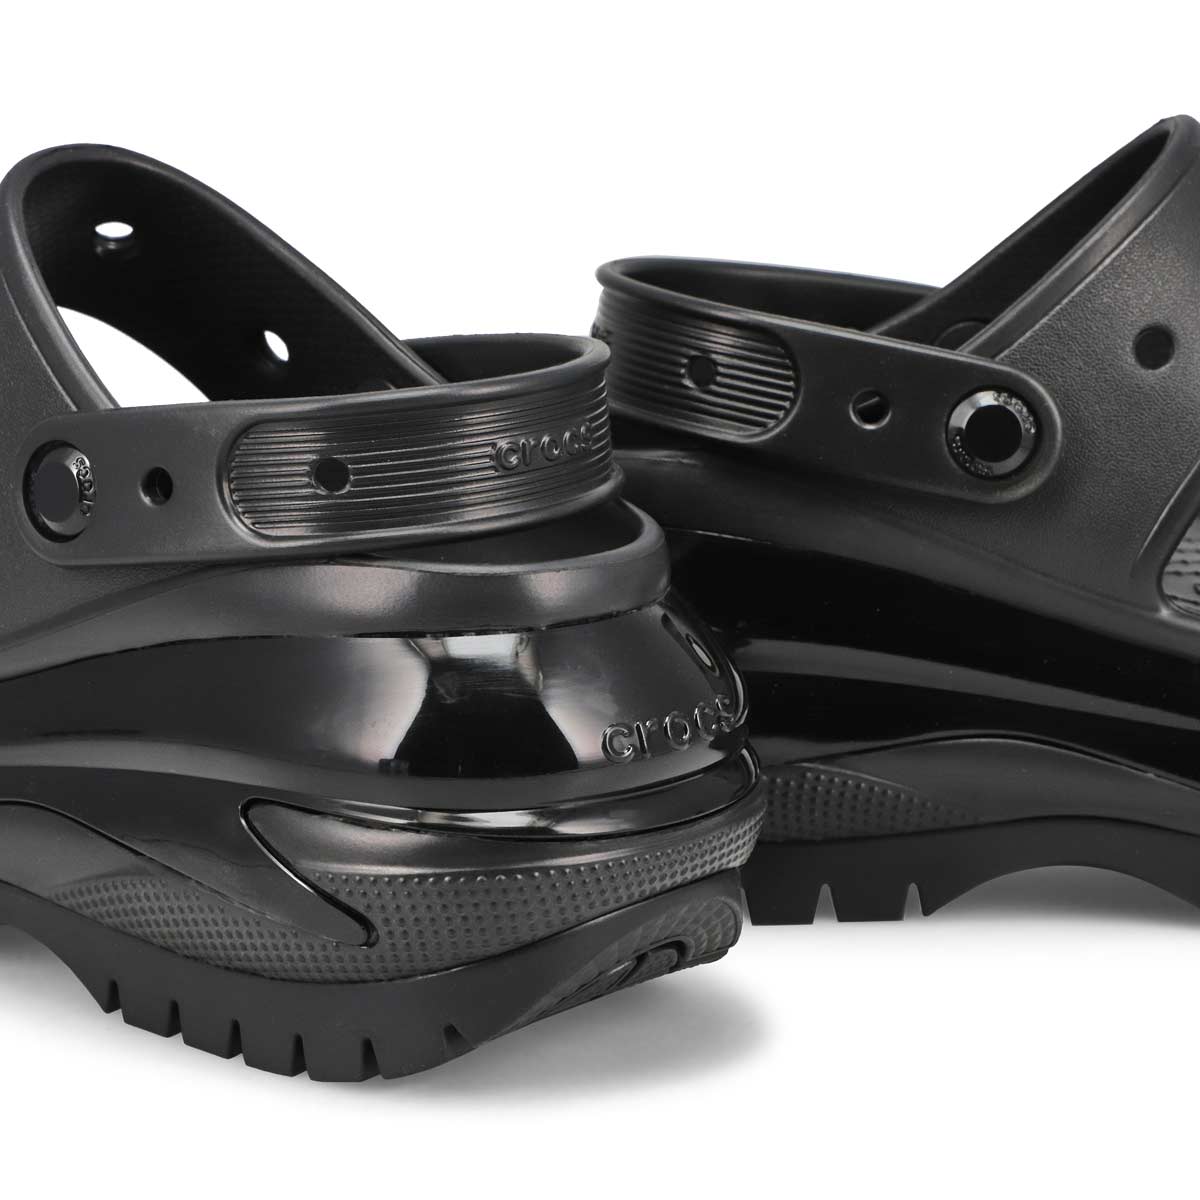 Sandale plateforme CLASSIC MEGA CRUSH, noir, femmes